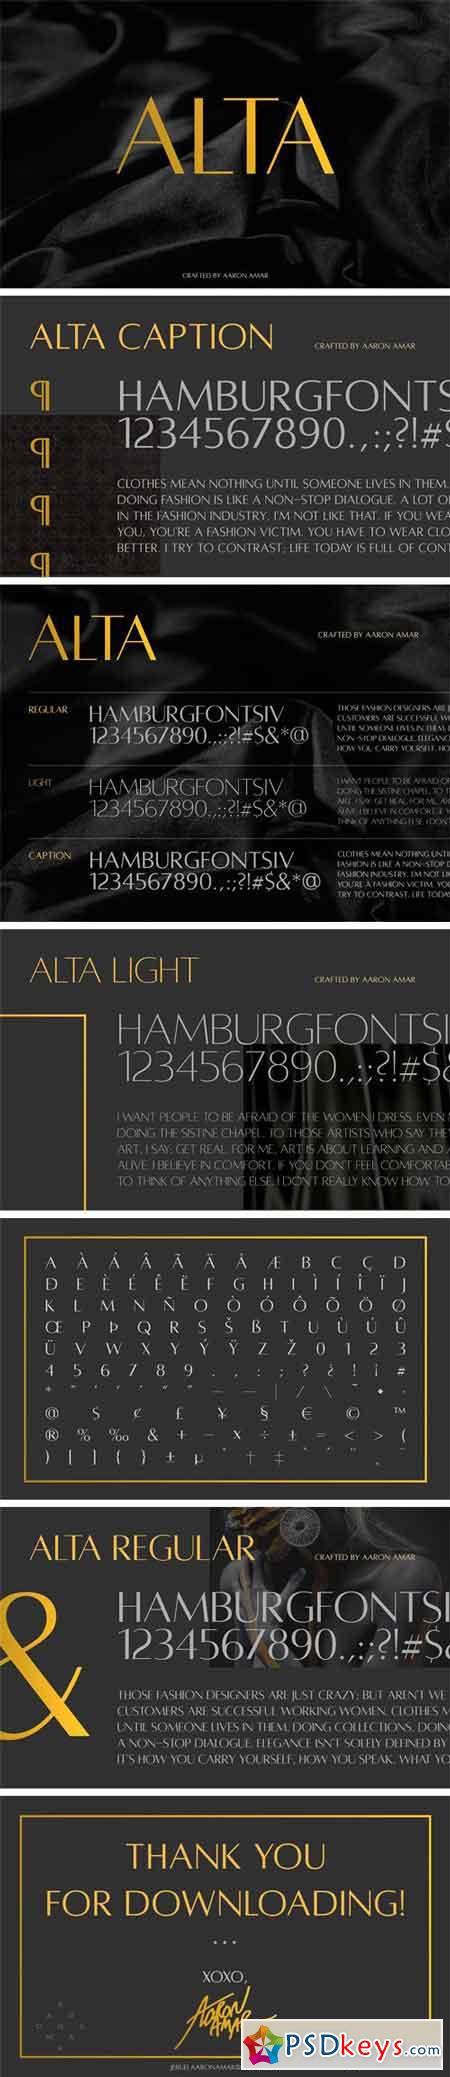 Alta Typeface (3 Weights) 1434641